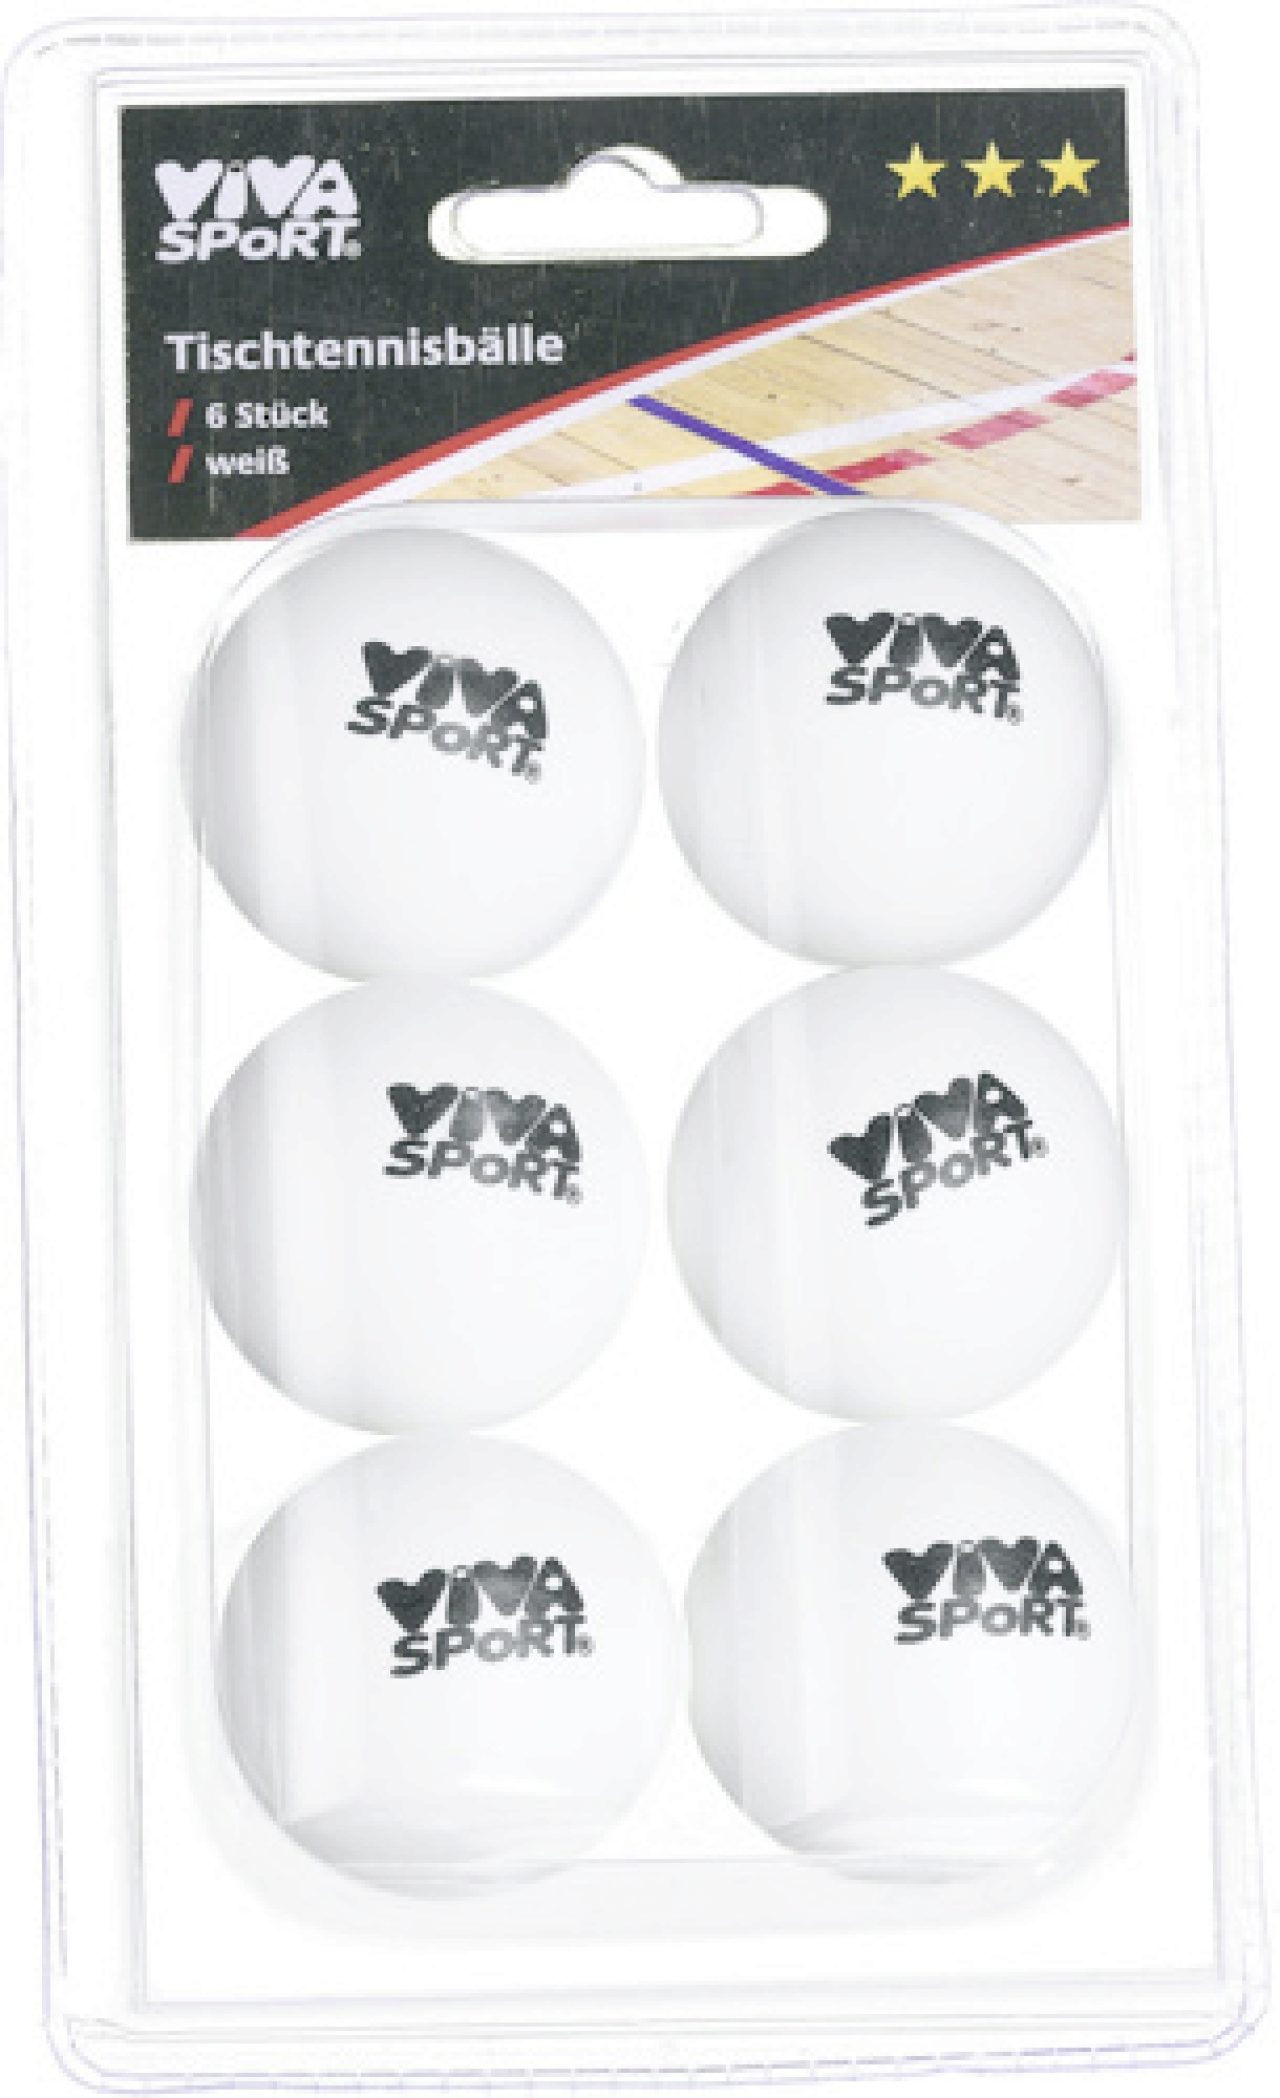 ViVa Sport Tischtennisbälle 6er Pack *** Sterne idee+spiel 